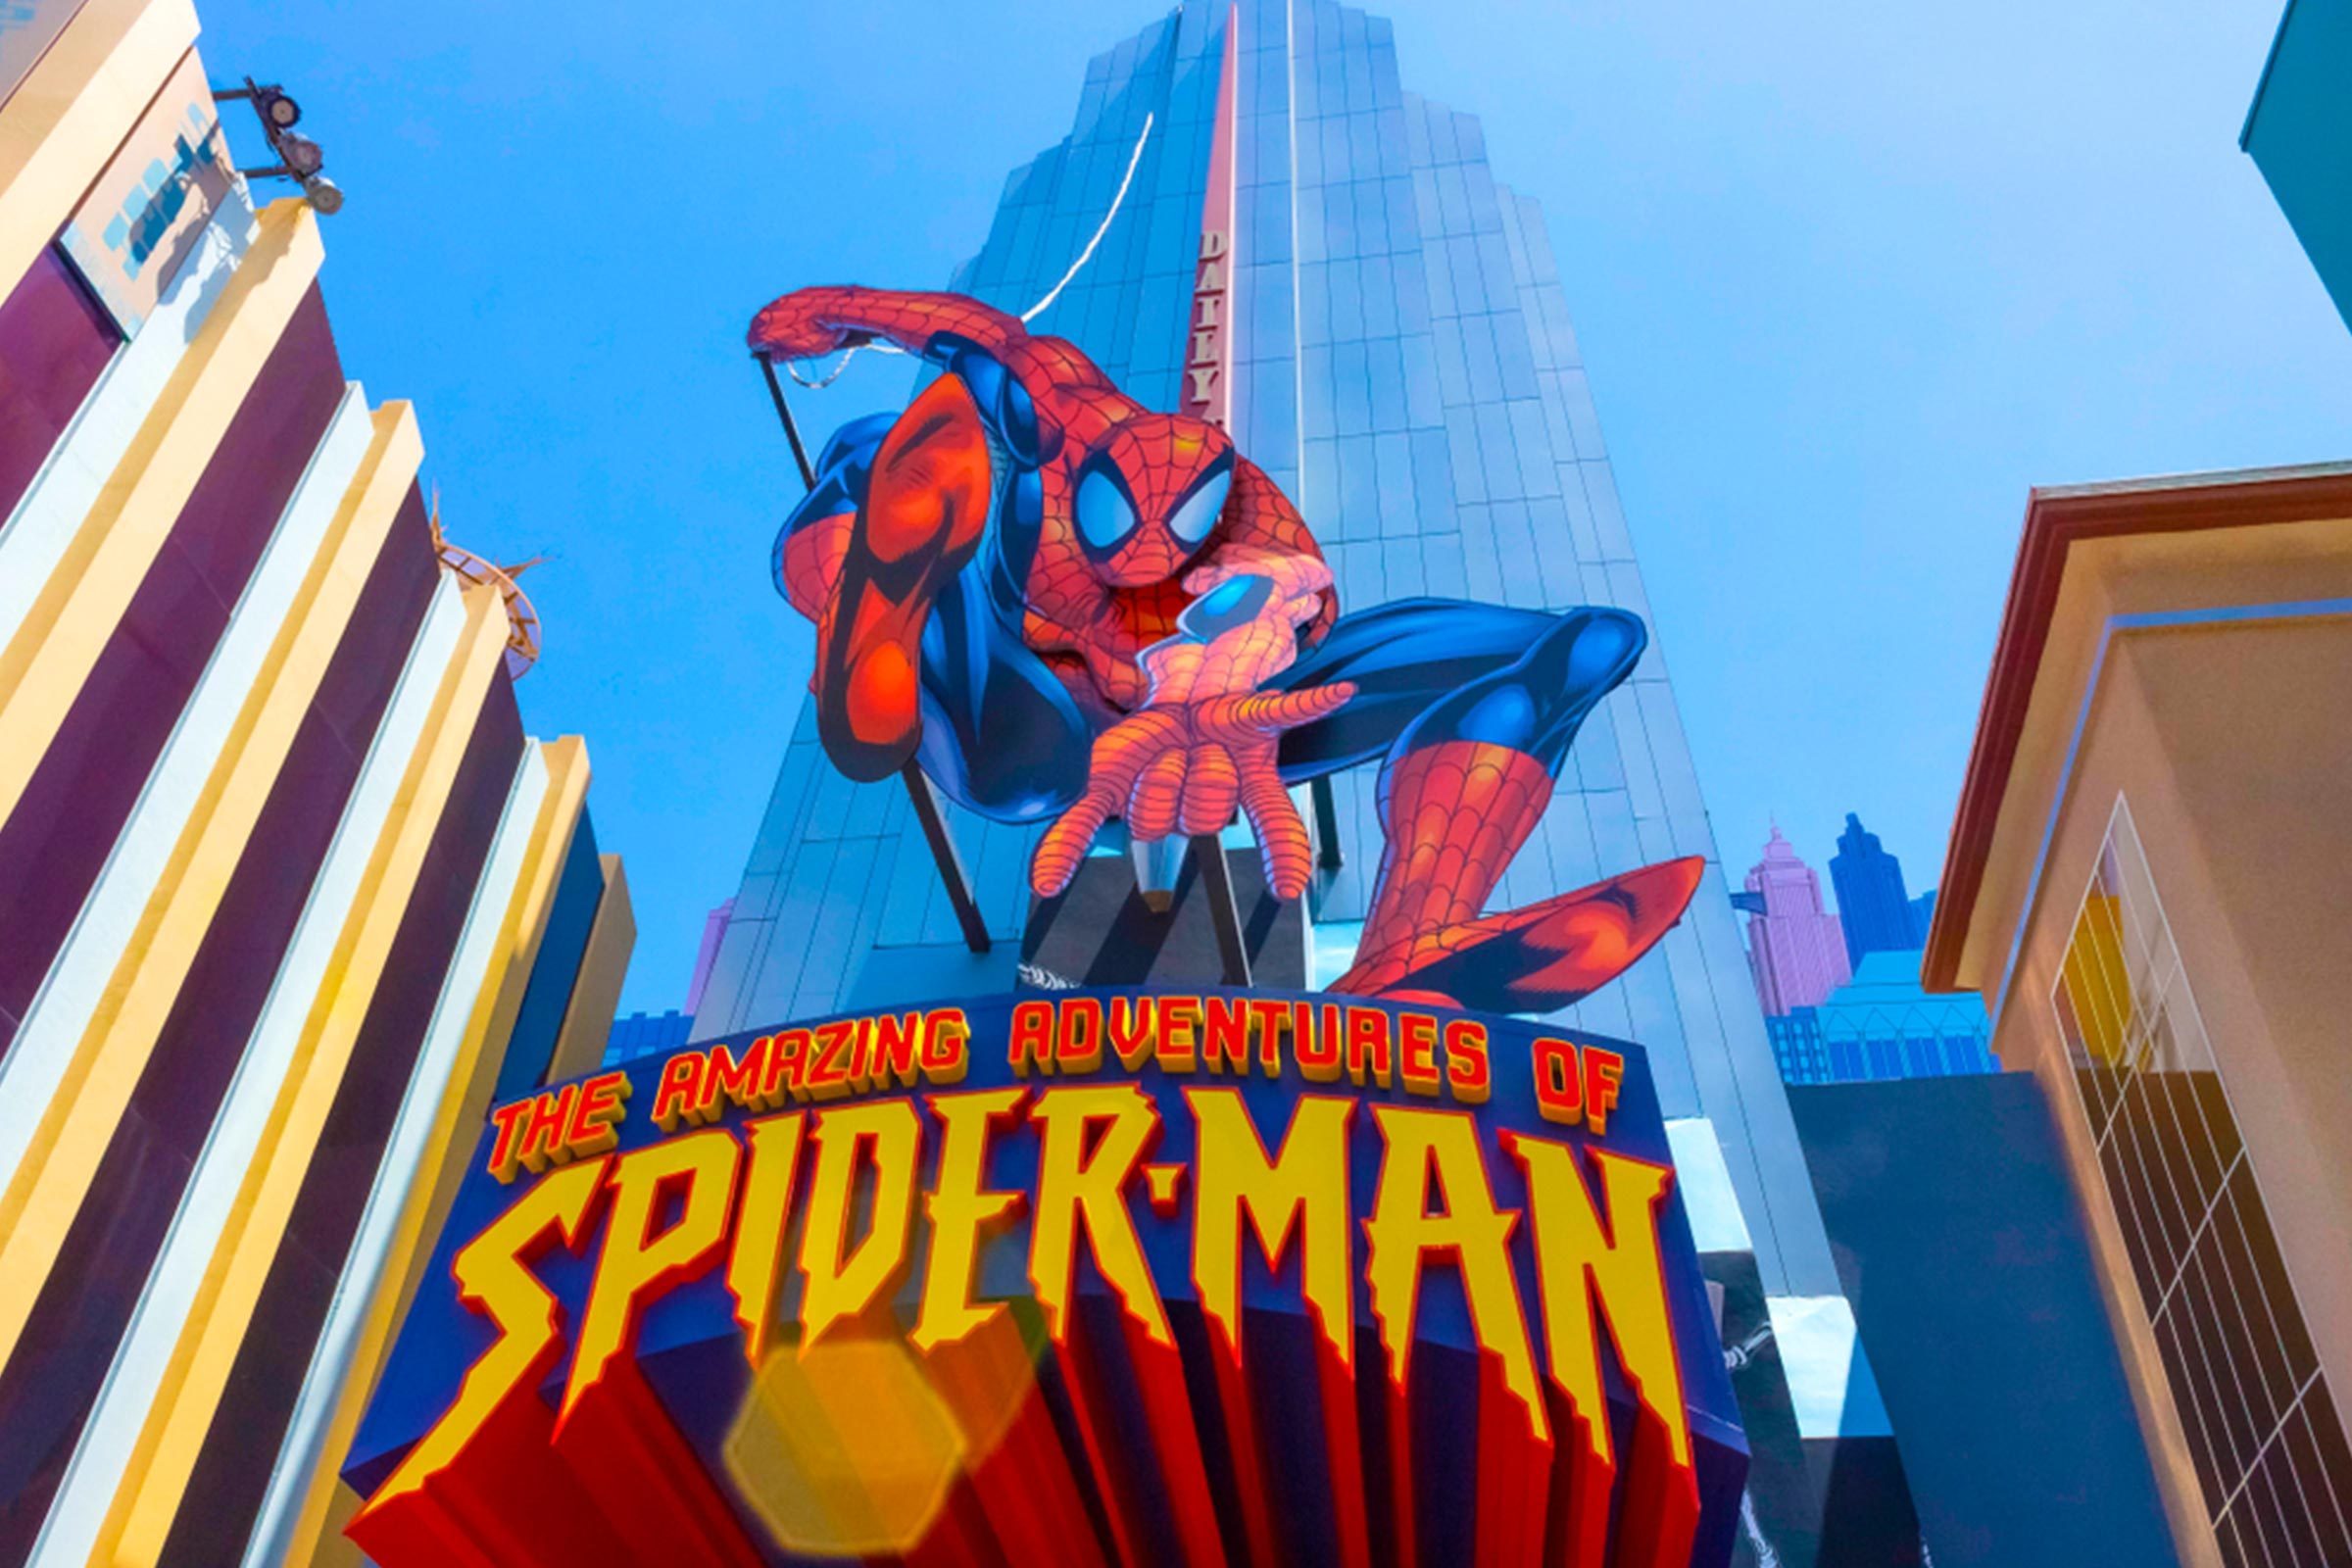 Marvel character spiderman